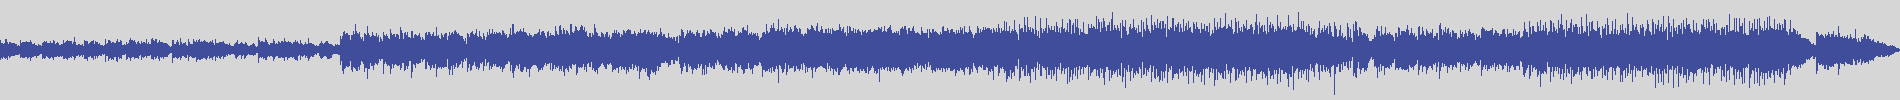 digiphonic_records [DPR013] Little Tony - Pamela [Original Mix] audio wave form